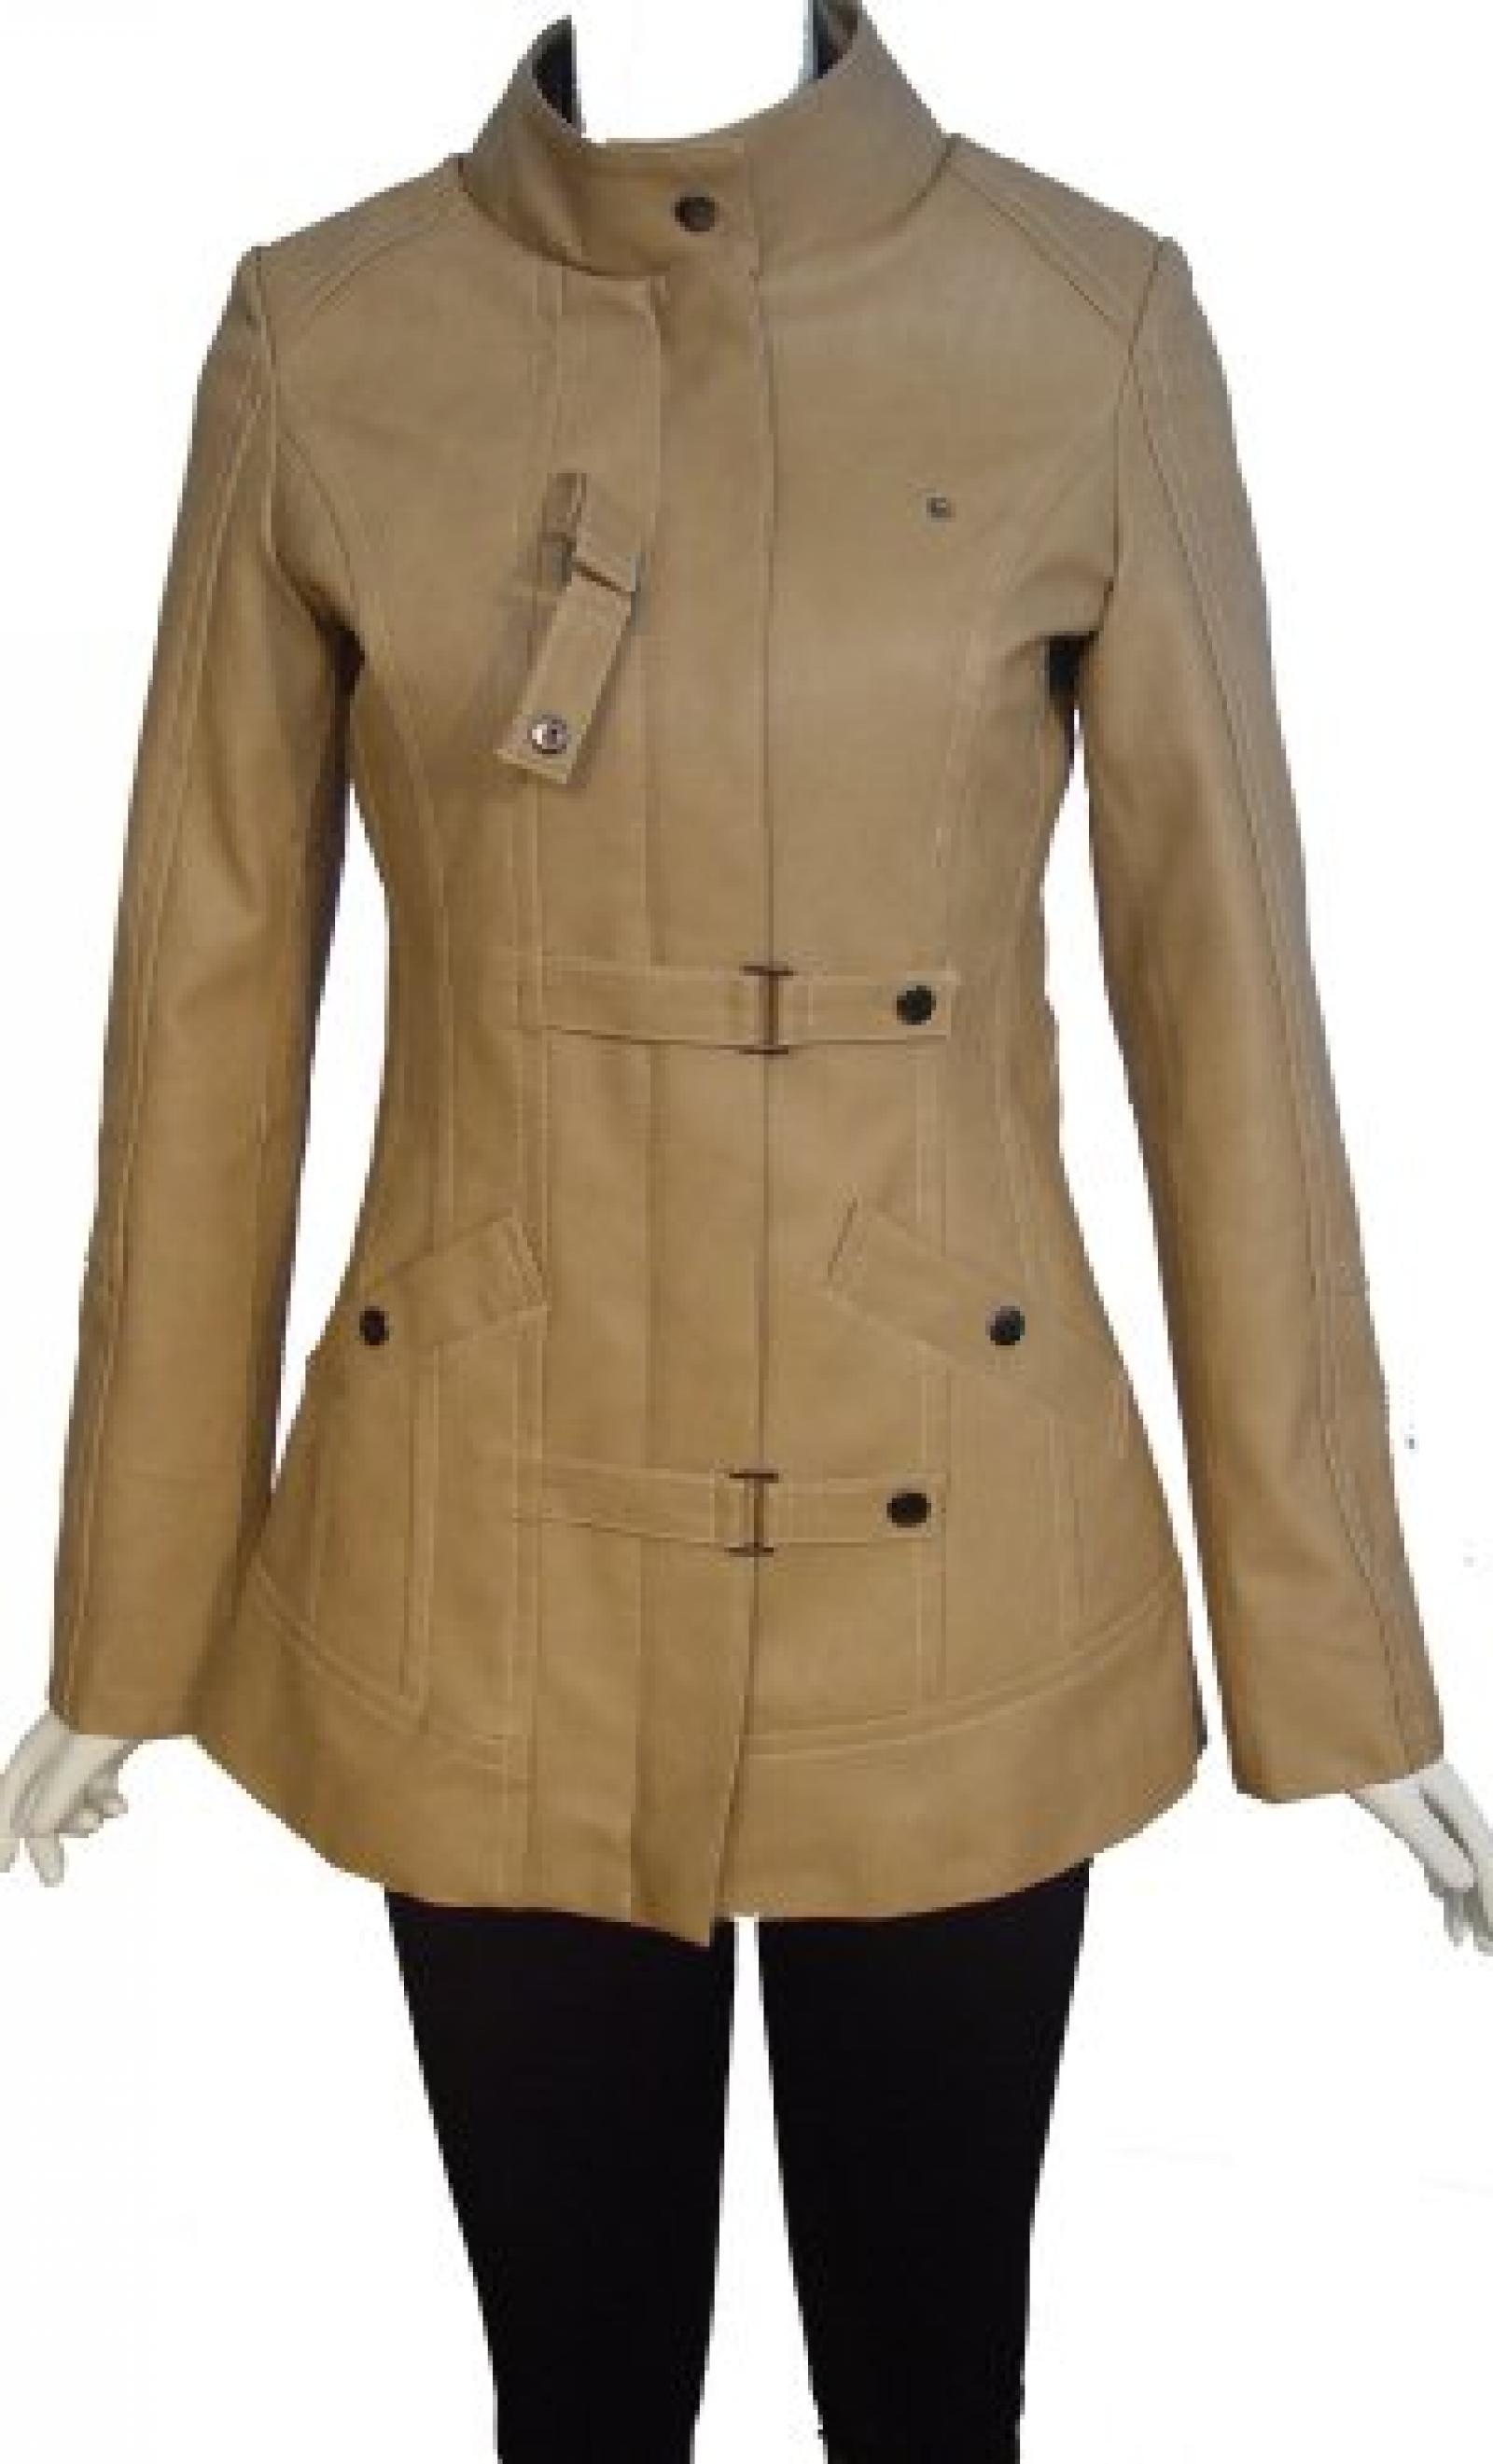 Nettailor Women 4200 Soft Leather Casual Jacket Zip Front Placket Tap Closure 